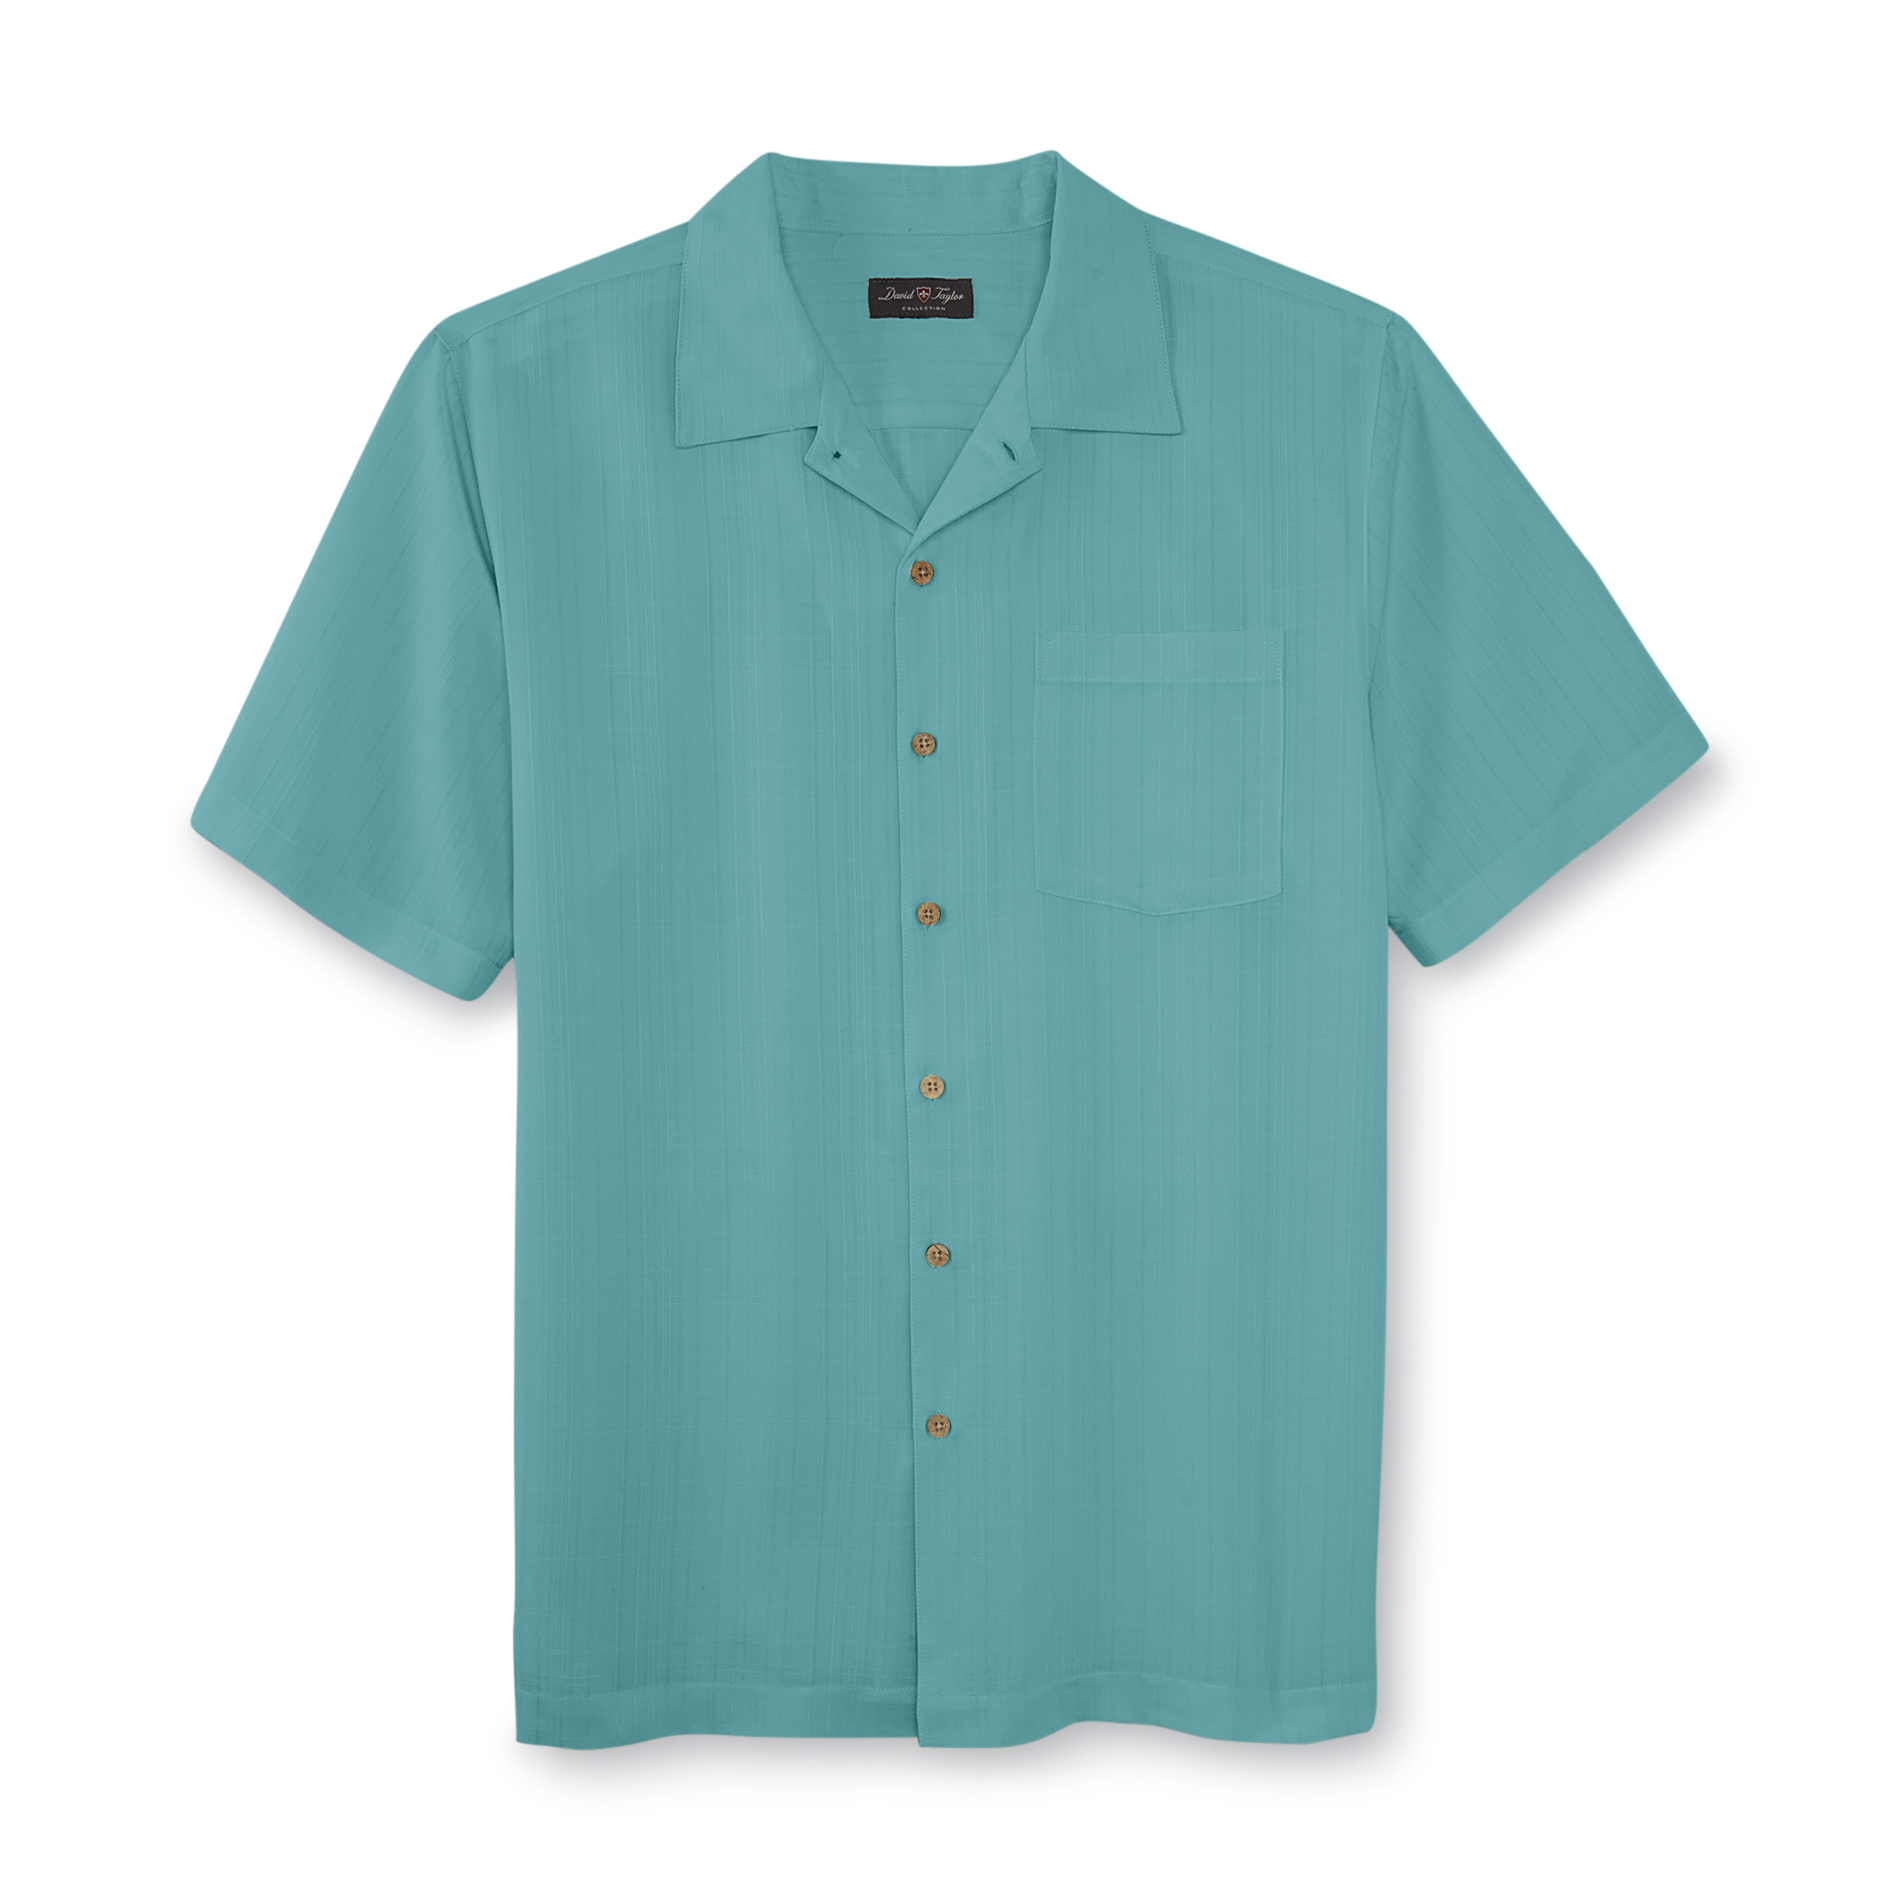 David Taylor Collection Men's Big & Tall Short-Sleeve Button-Front Shirt